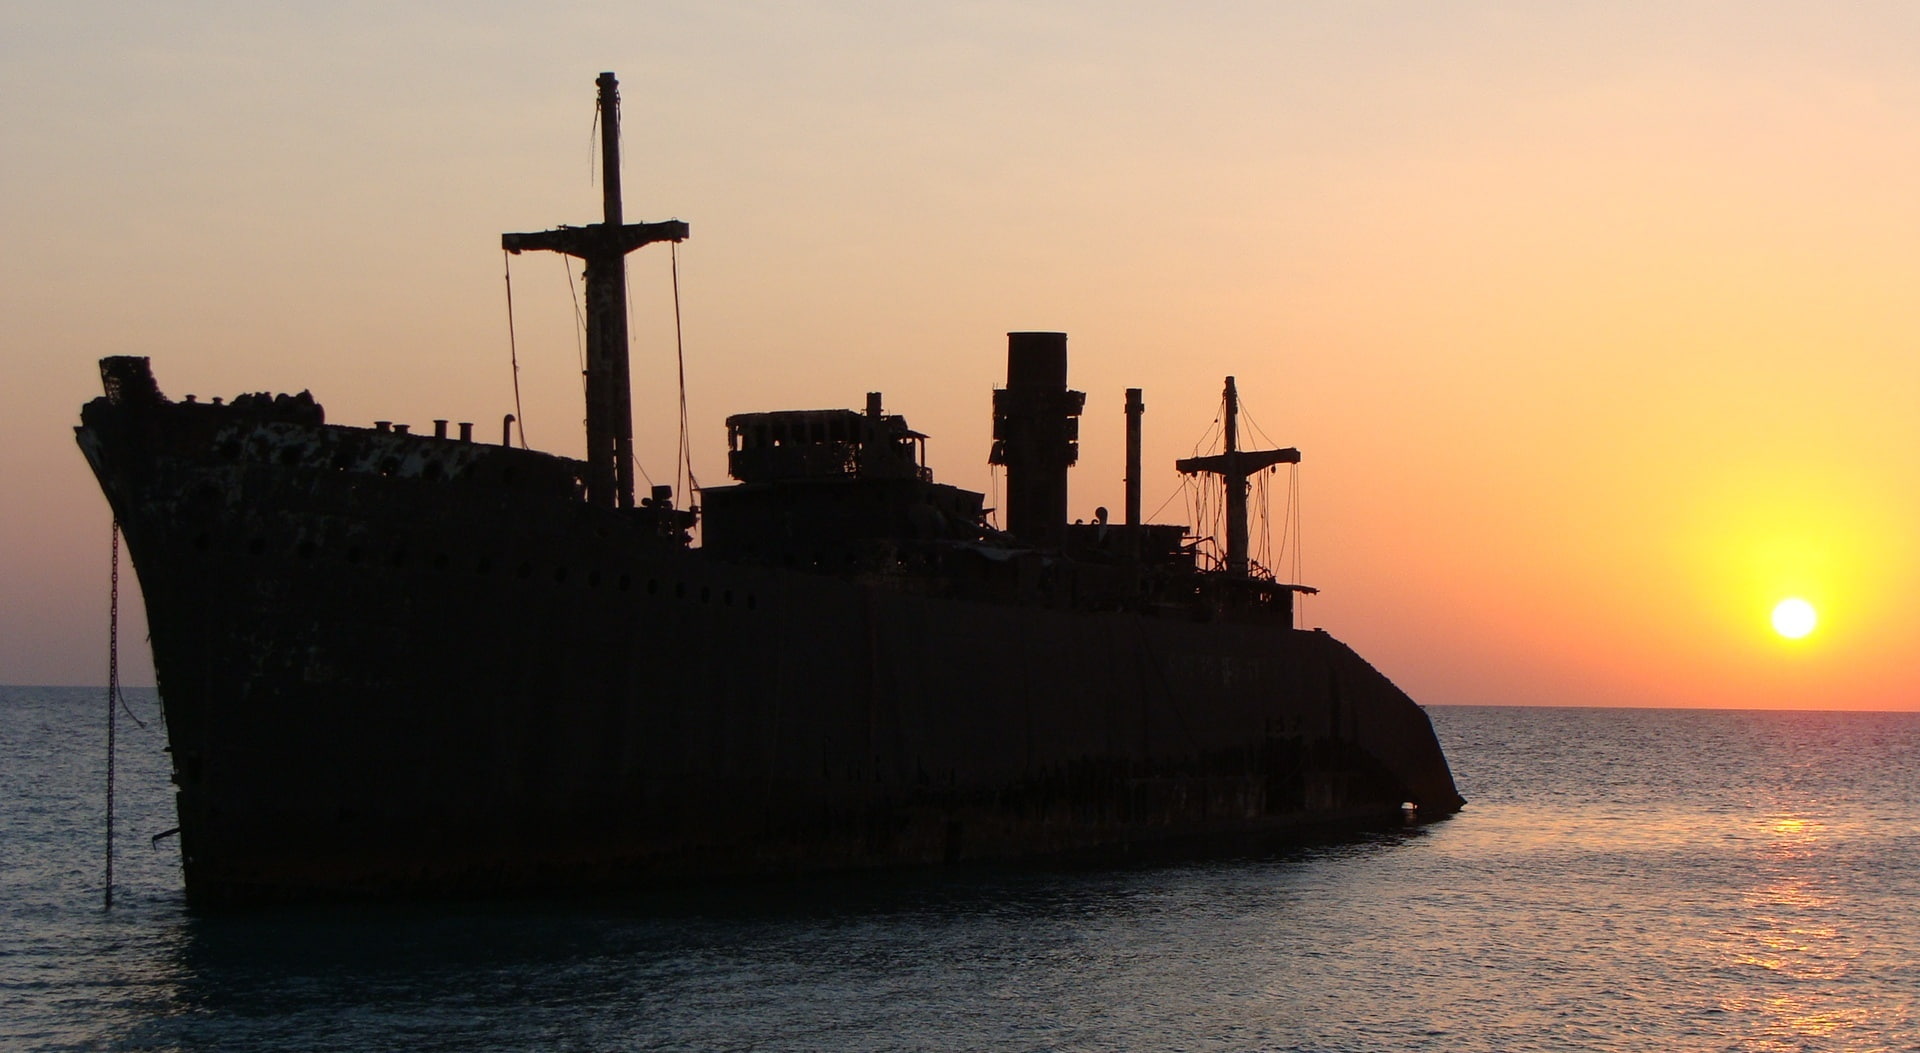 Iran Kish Island, black cruise ship, Asia, water, sea, sunset